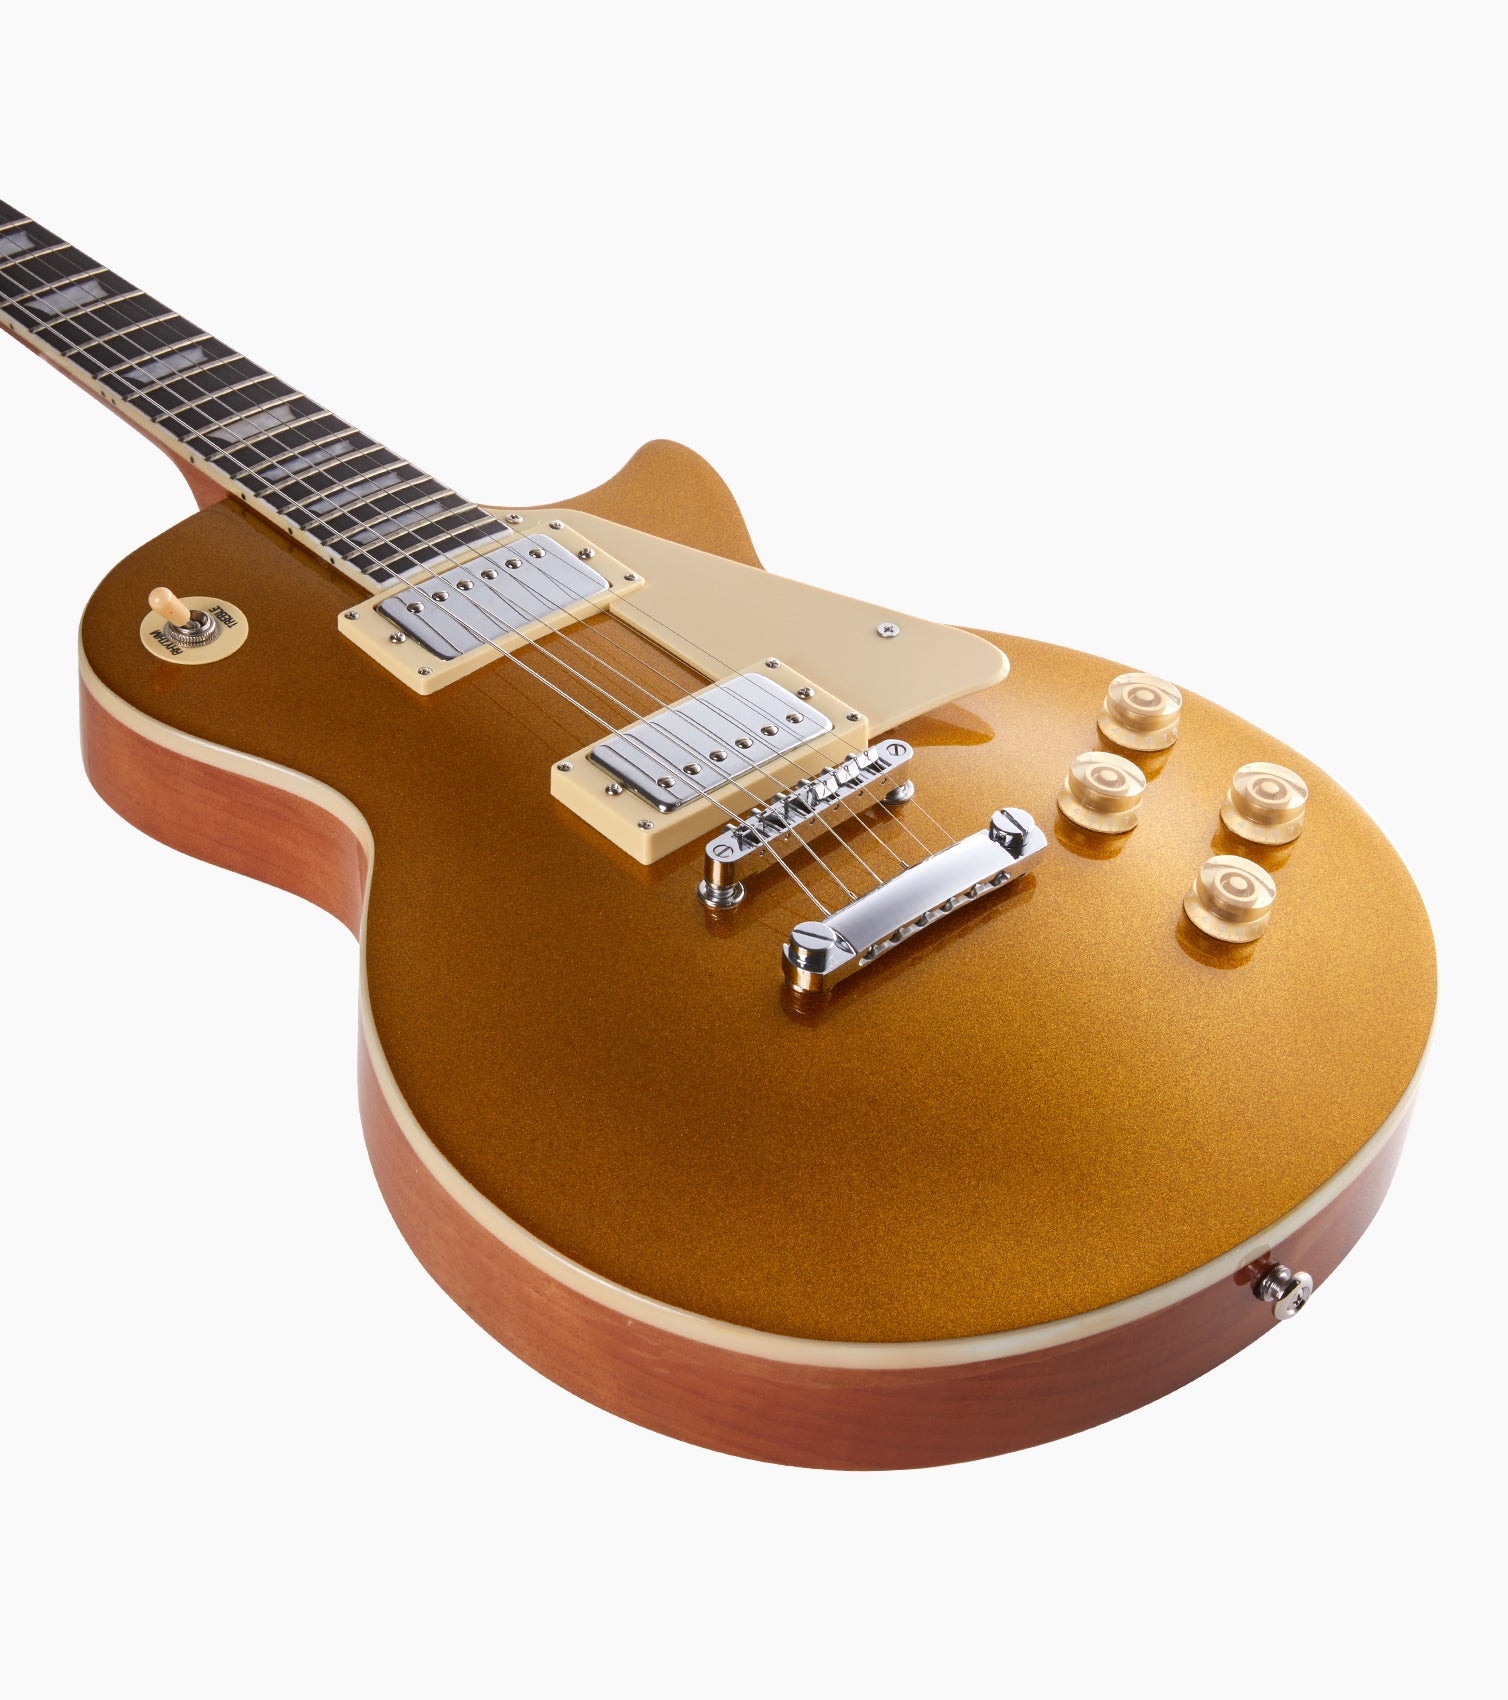 close-up of Honey les paul inspired electric guitar